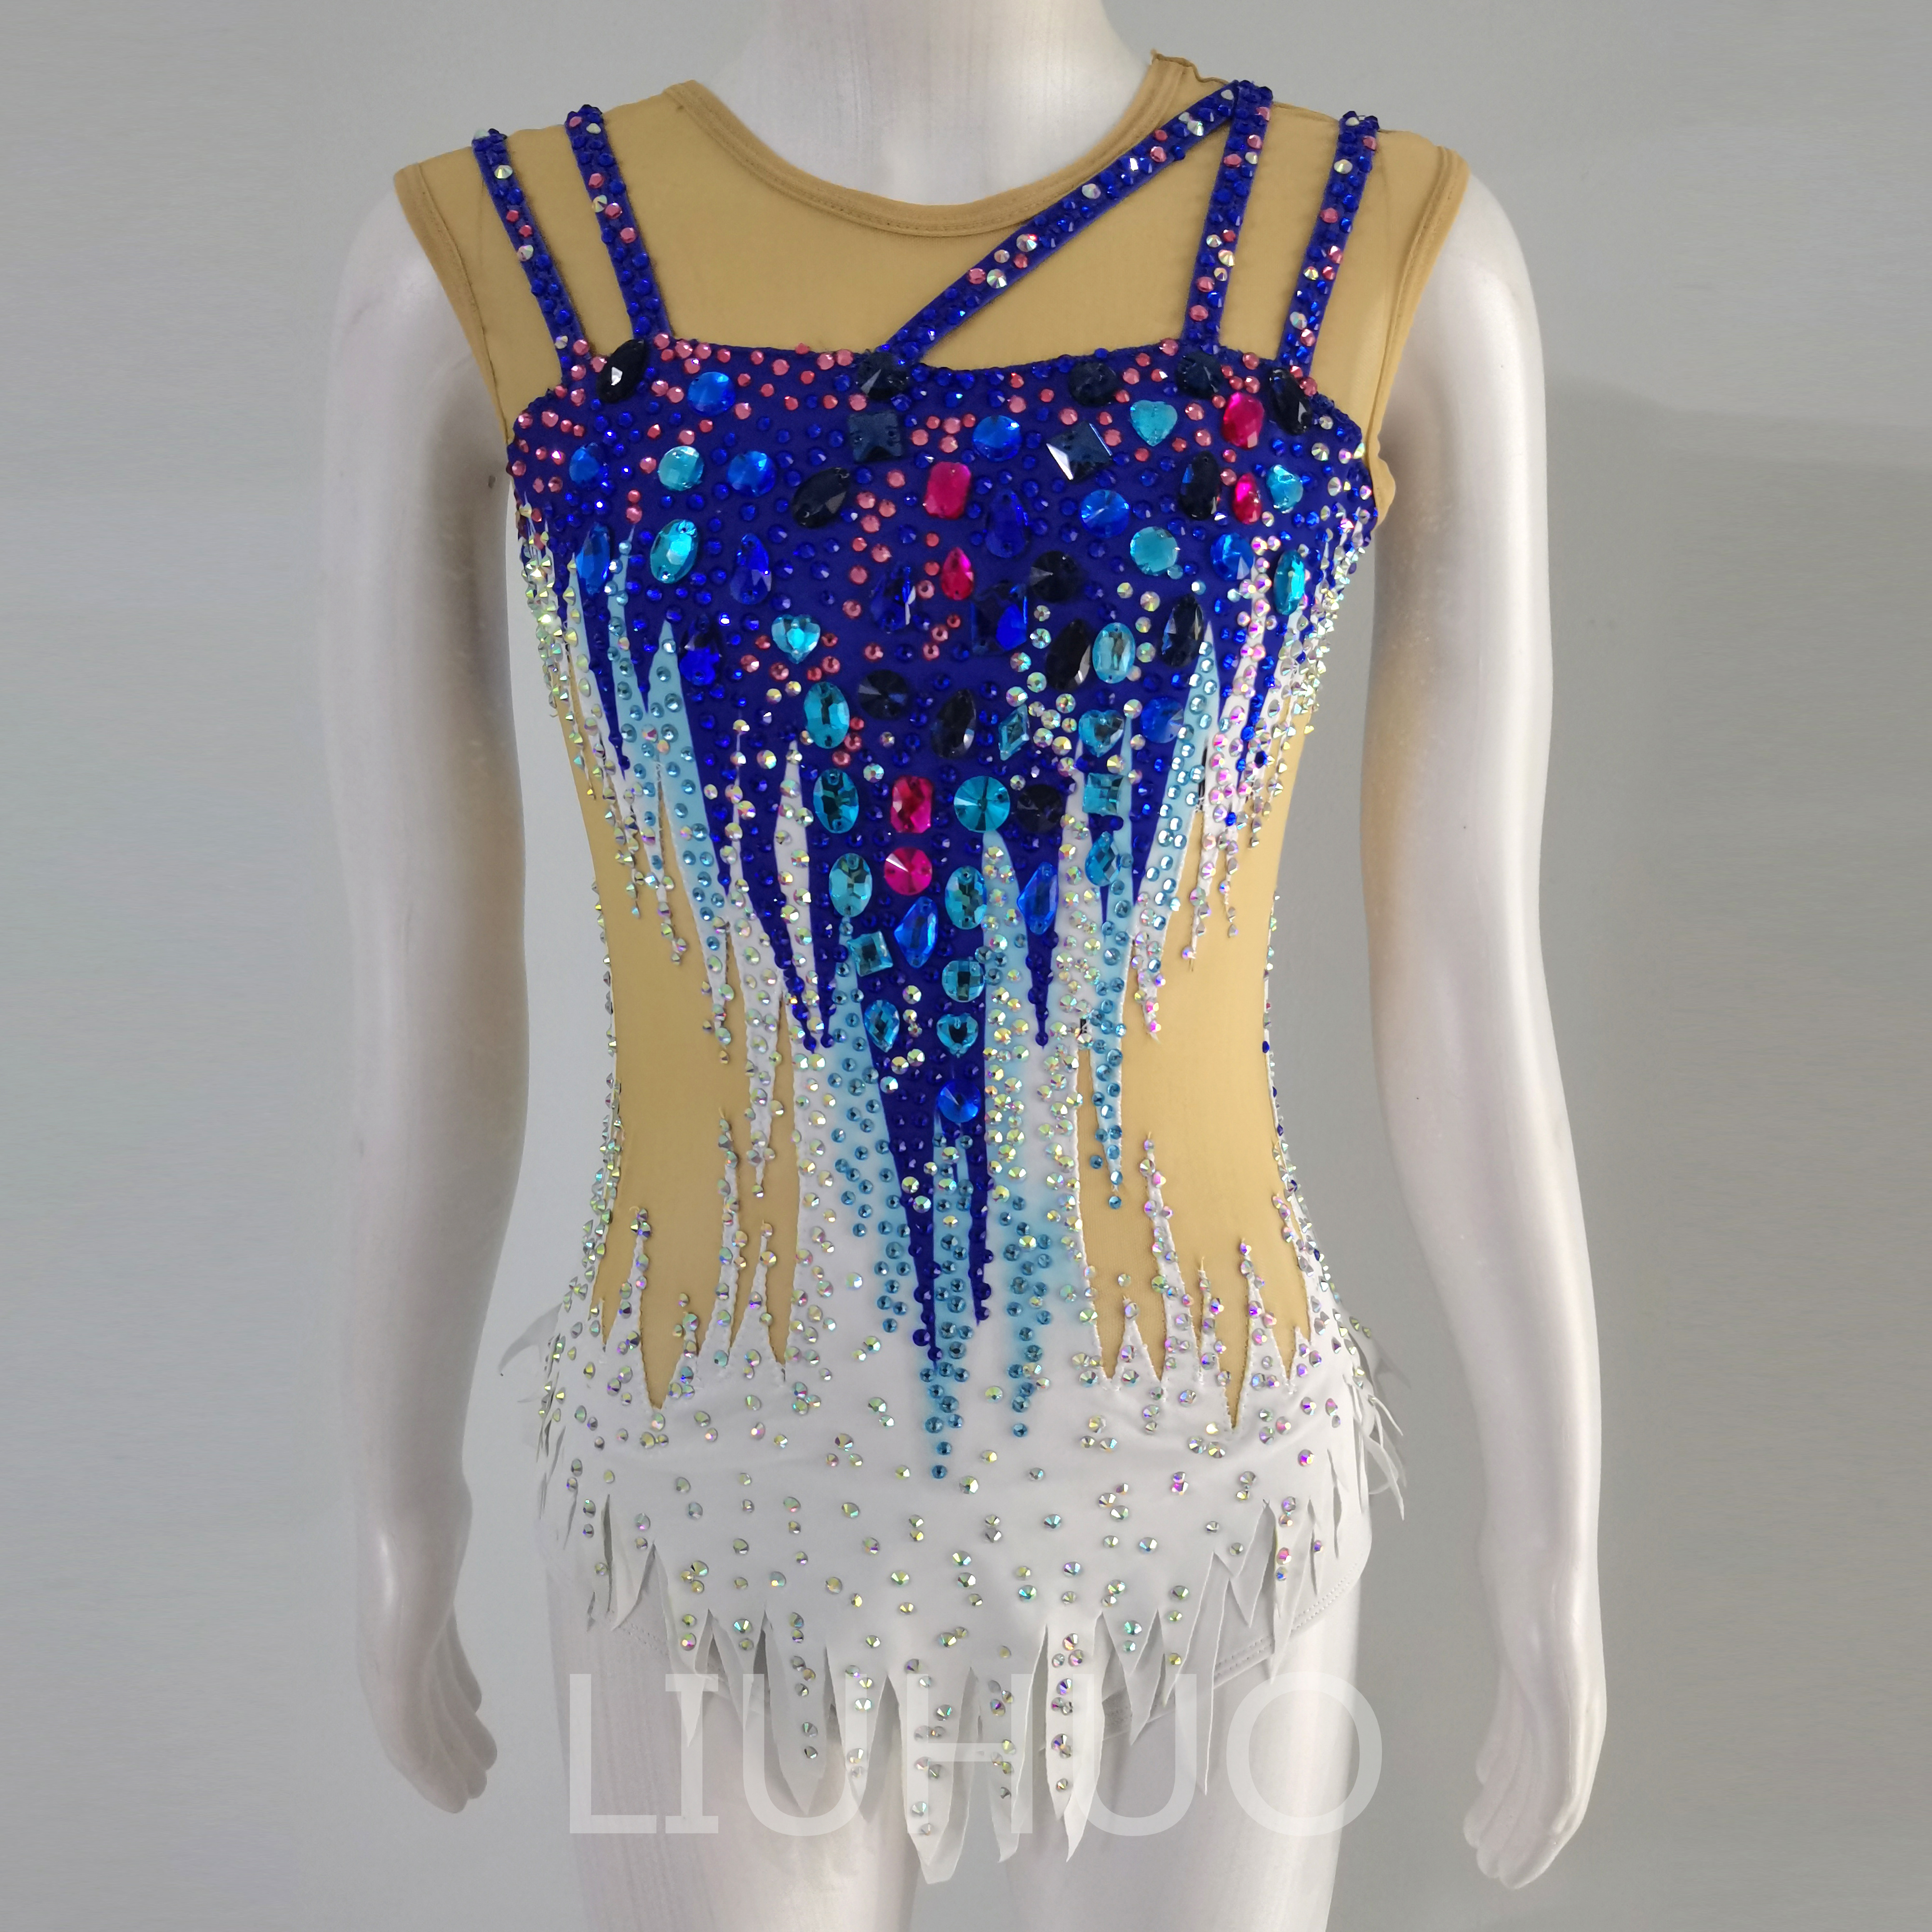 LIUHUO Rhythmic Gymnastics Leotards Artistics Professional White-Blue